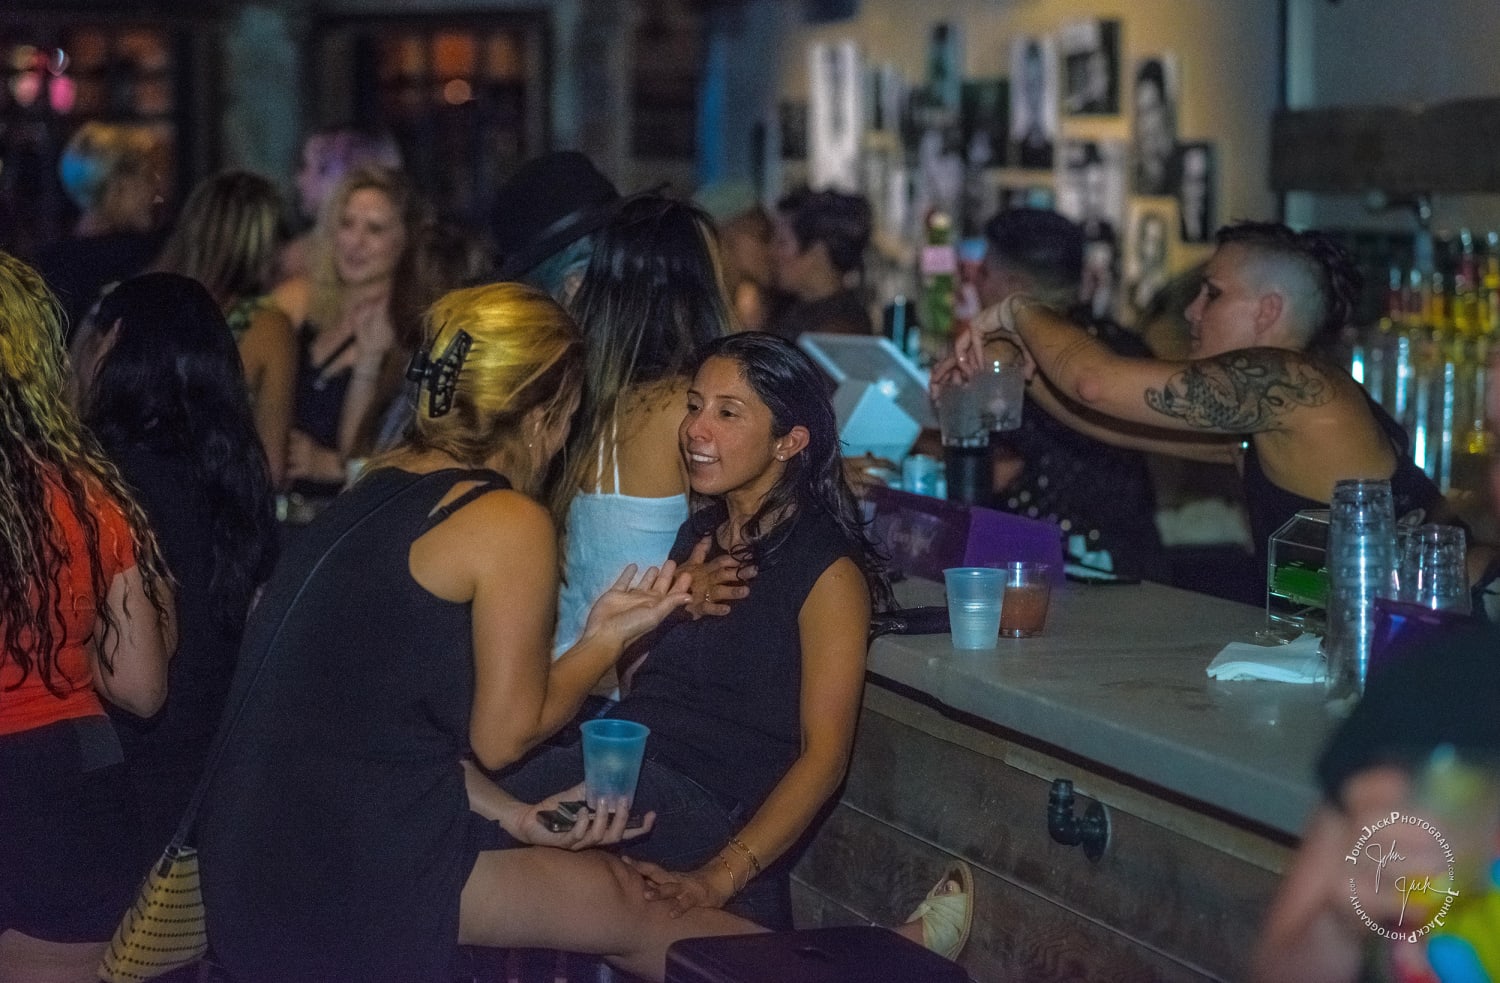 After decade of decline, 2 lesbian bars open in D.C. - General news - NewsL...